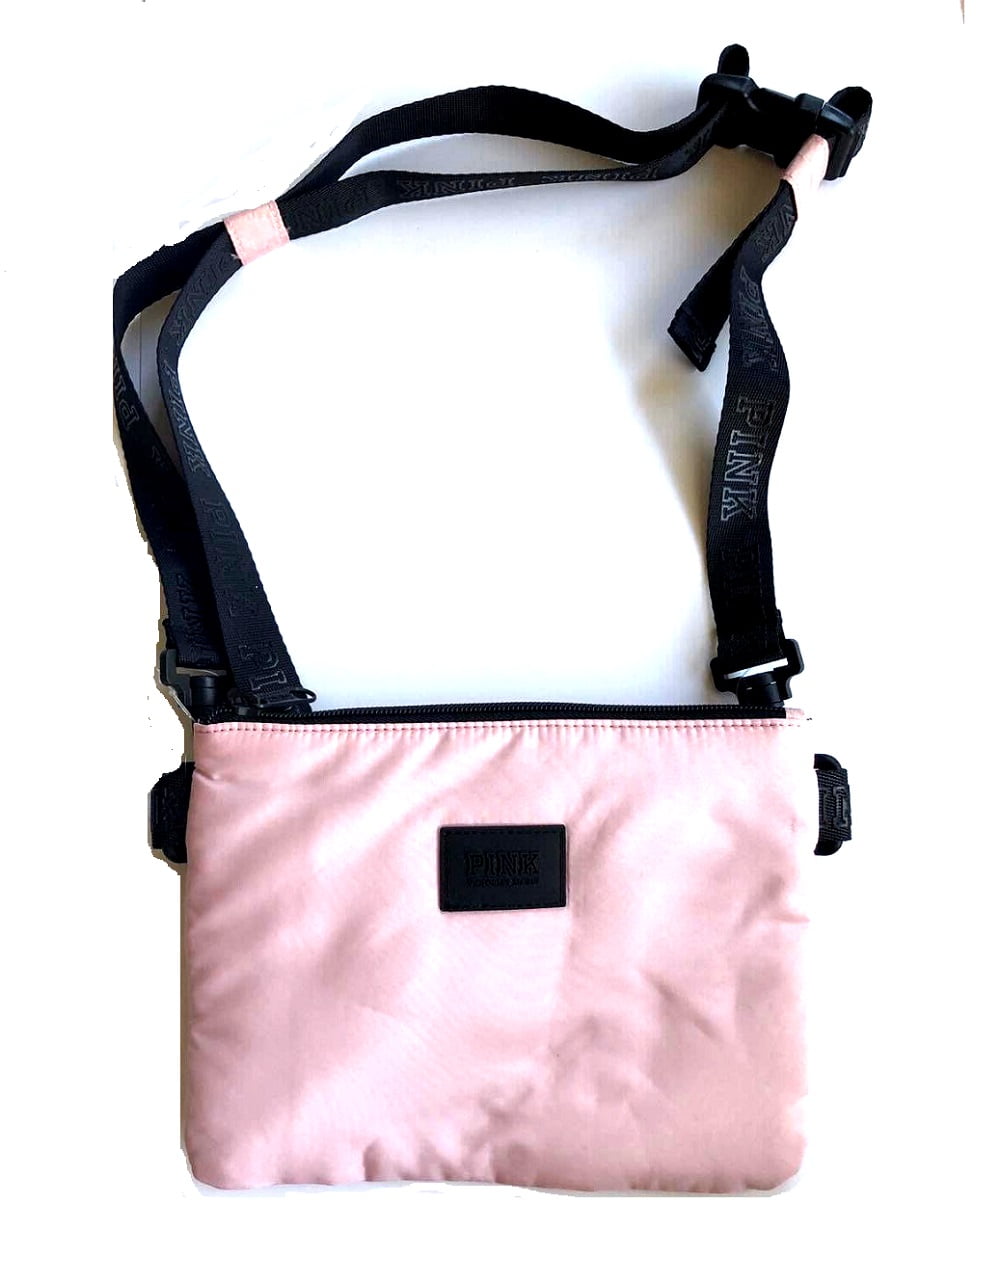 Victoria's Secret Gold Glitter Foldover Zip Top Clutch Purse Handbag | eBay